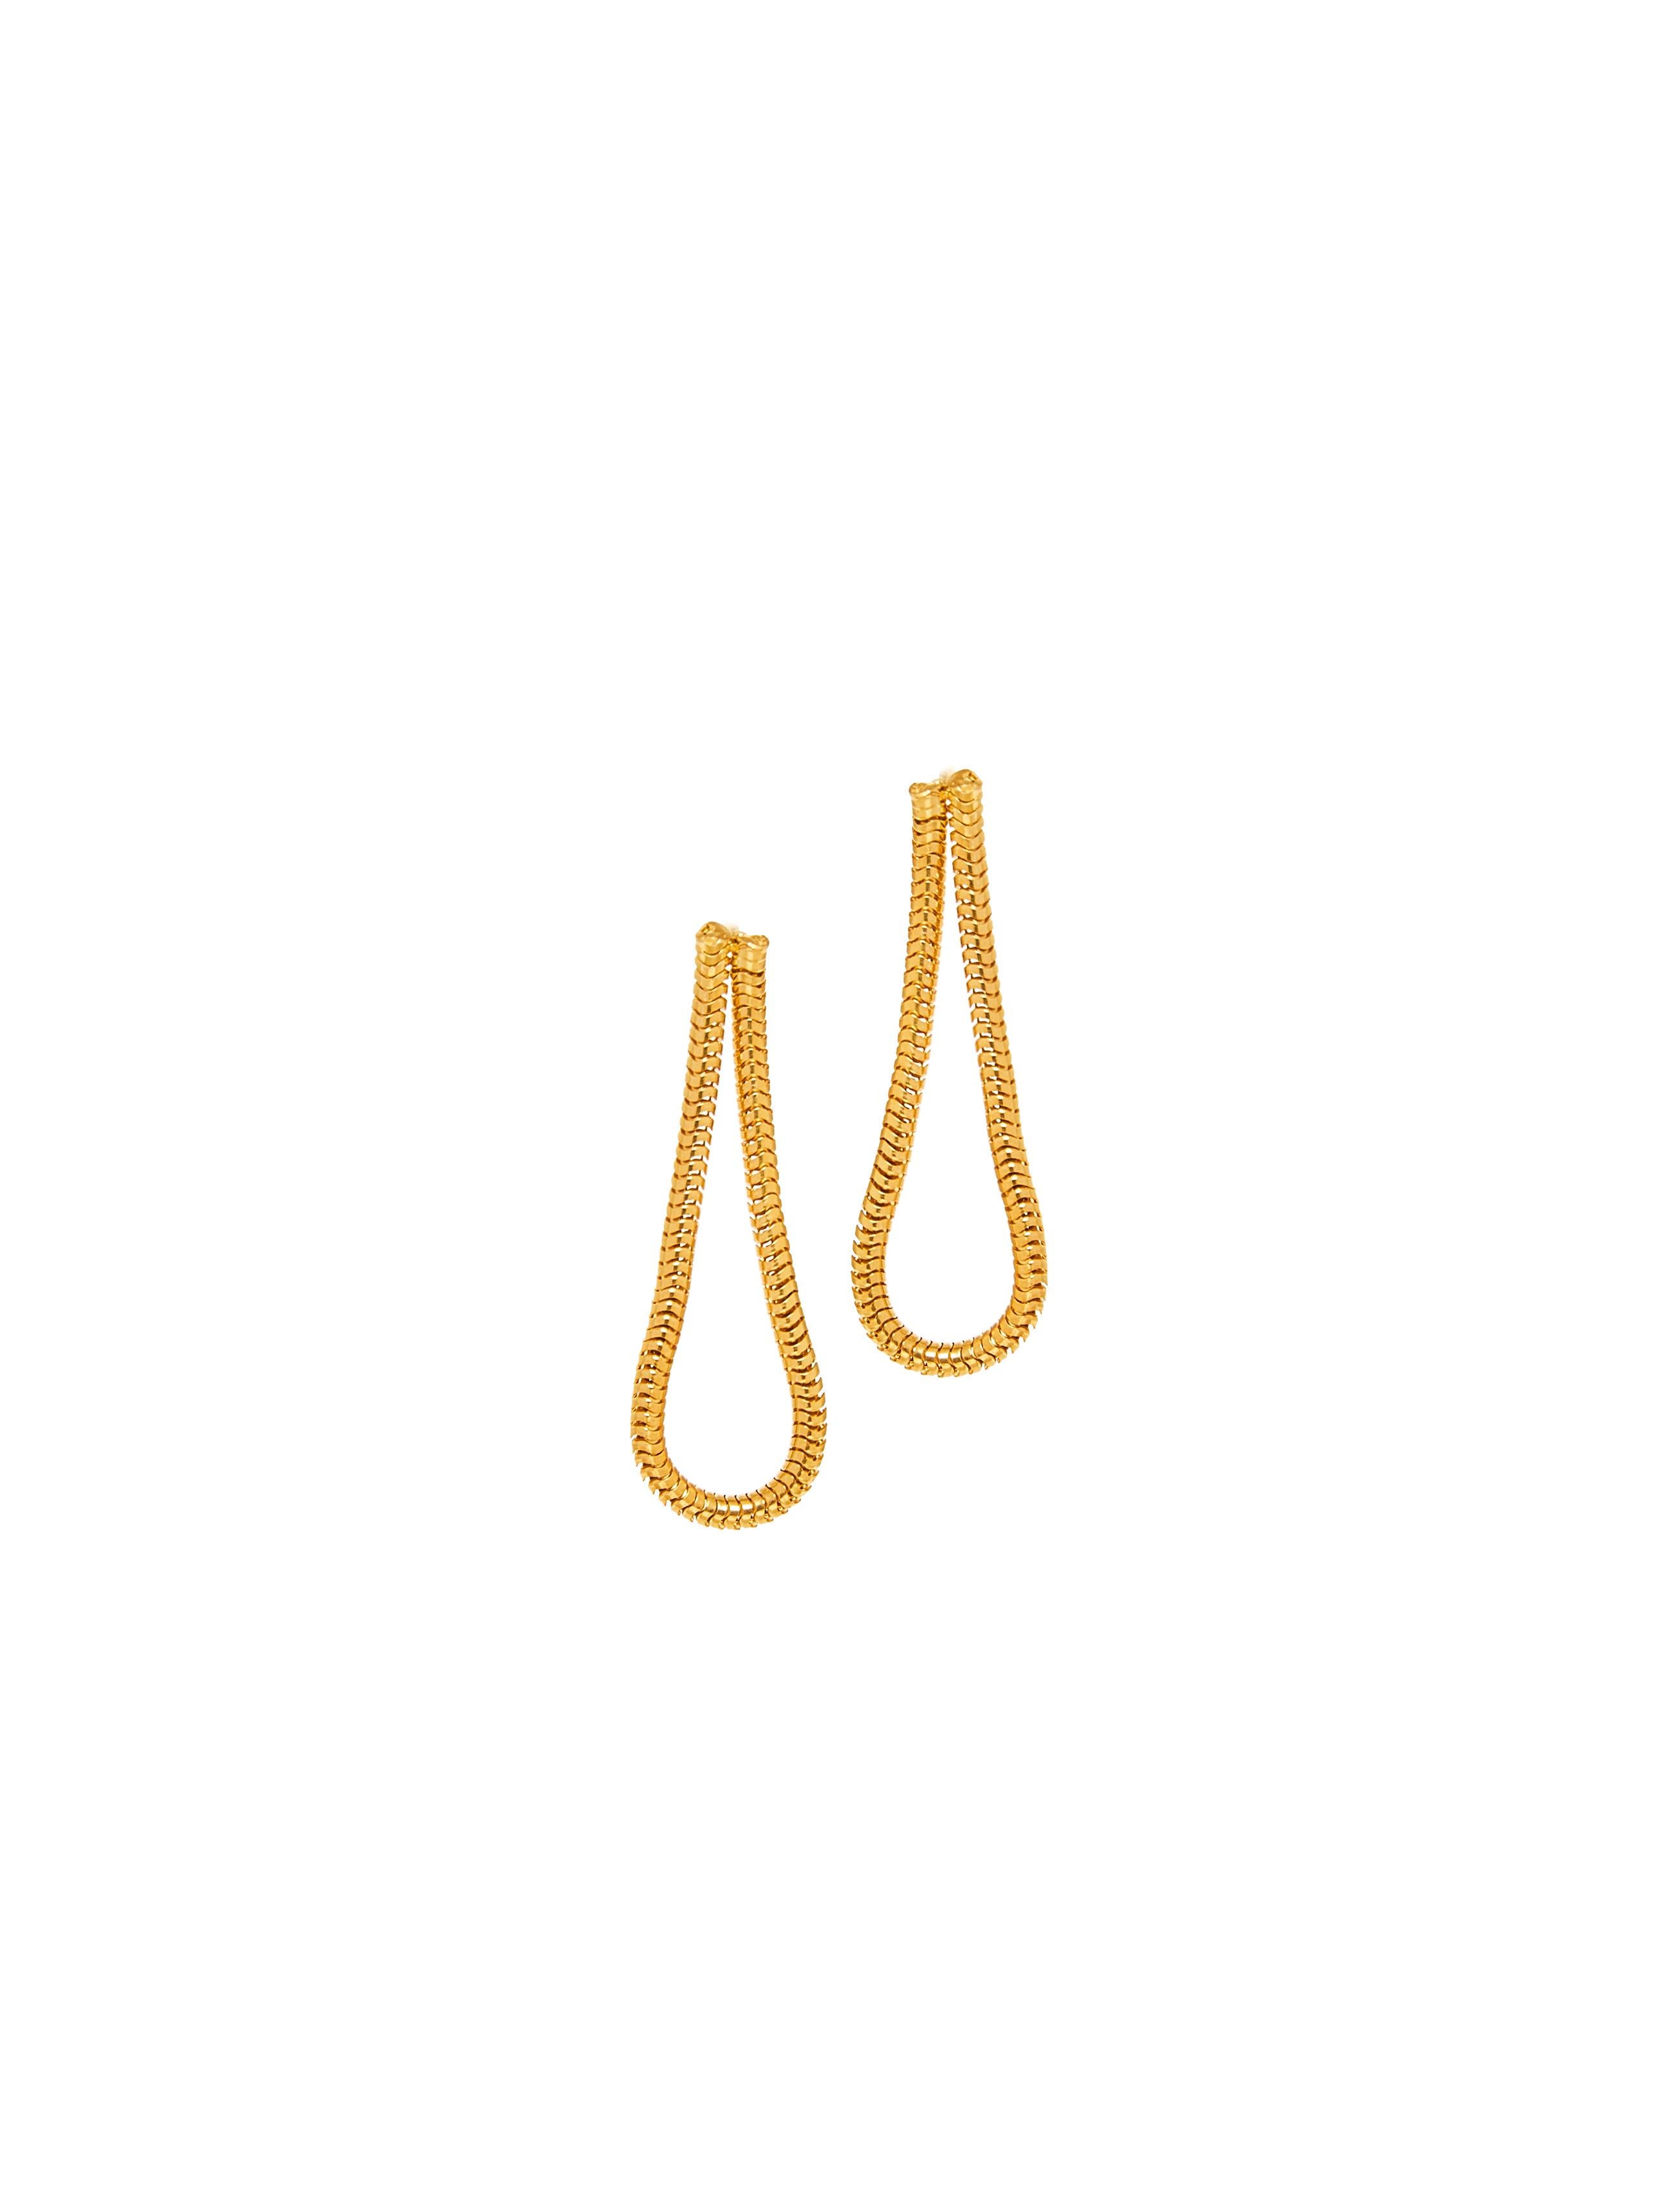 Melodia Earrings 18 Karat Gold-Plated Sterling Silver Snake Chain Greek Jewelry For Sale 1